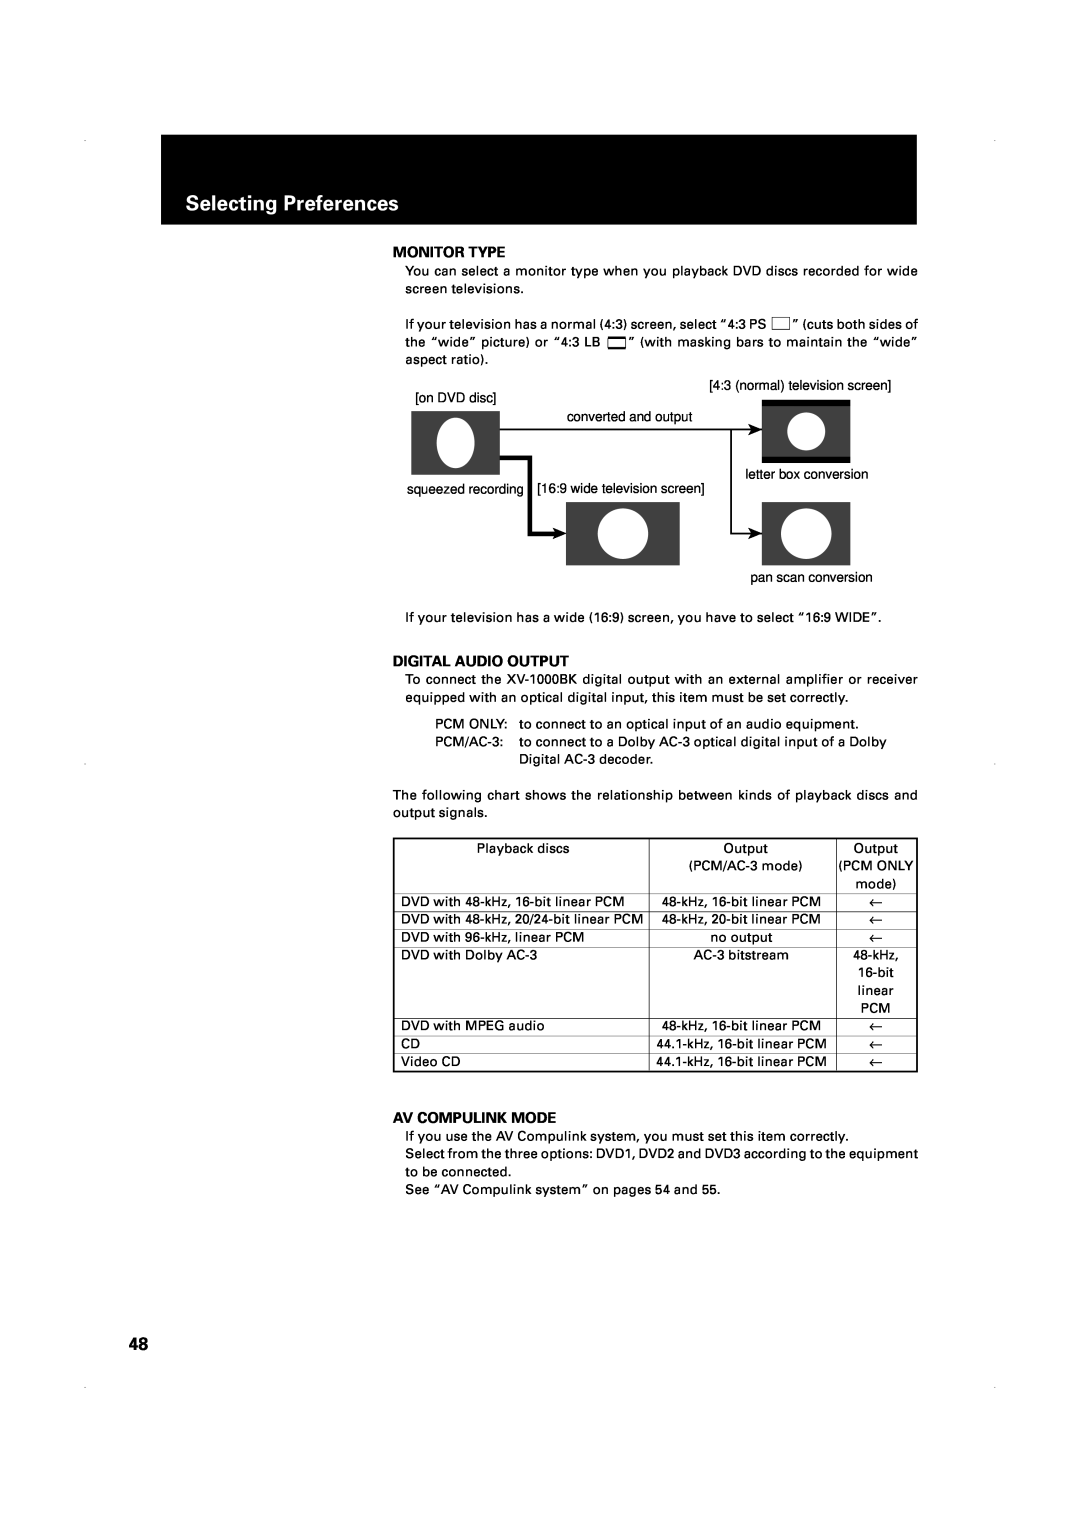 JVC XV-1000BK manual Selecting Preferences, Monitor Type, Digital Audio Output, Av Compulink Mode 